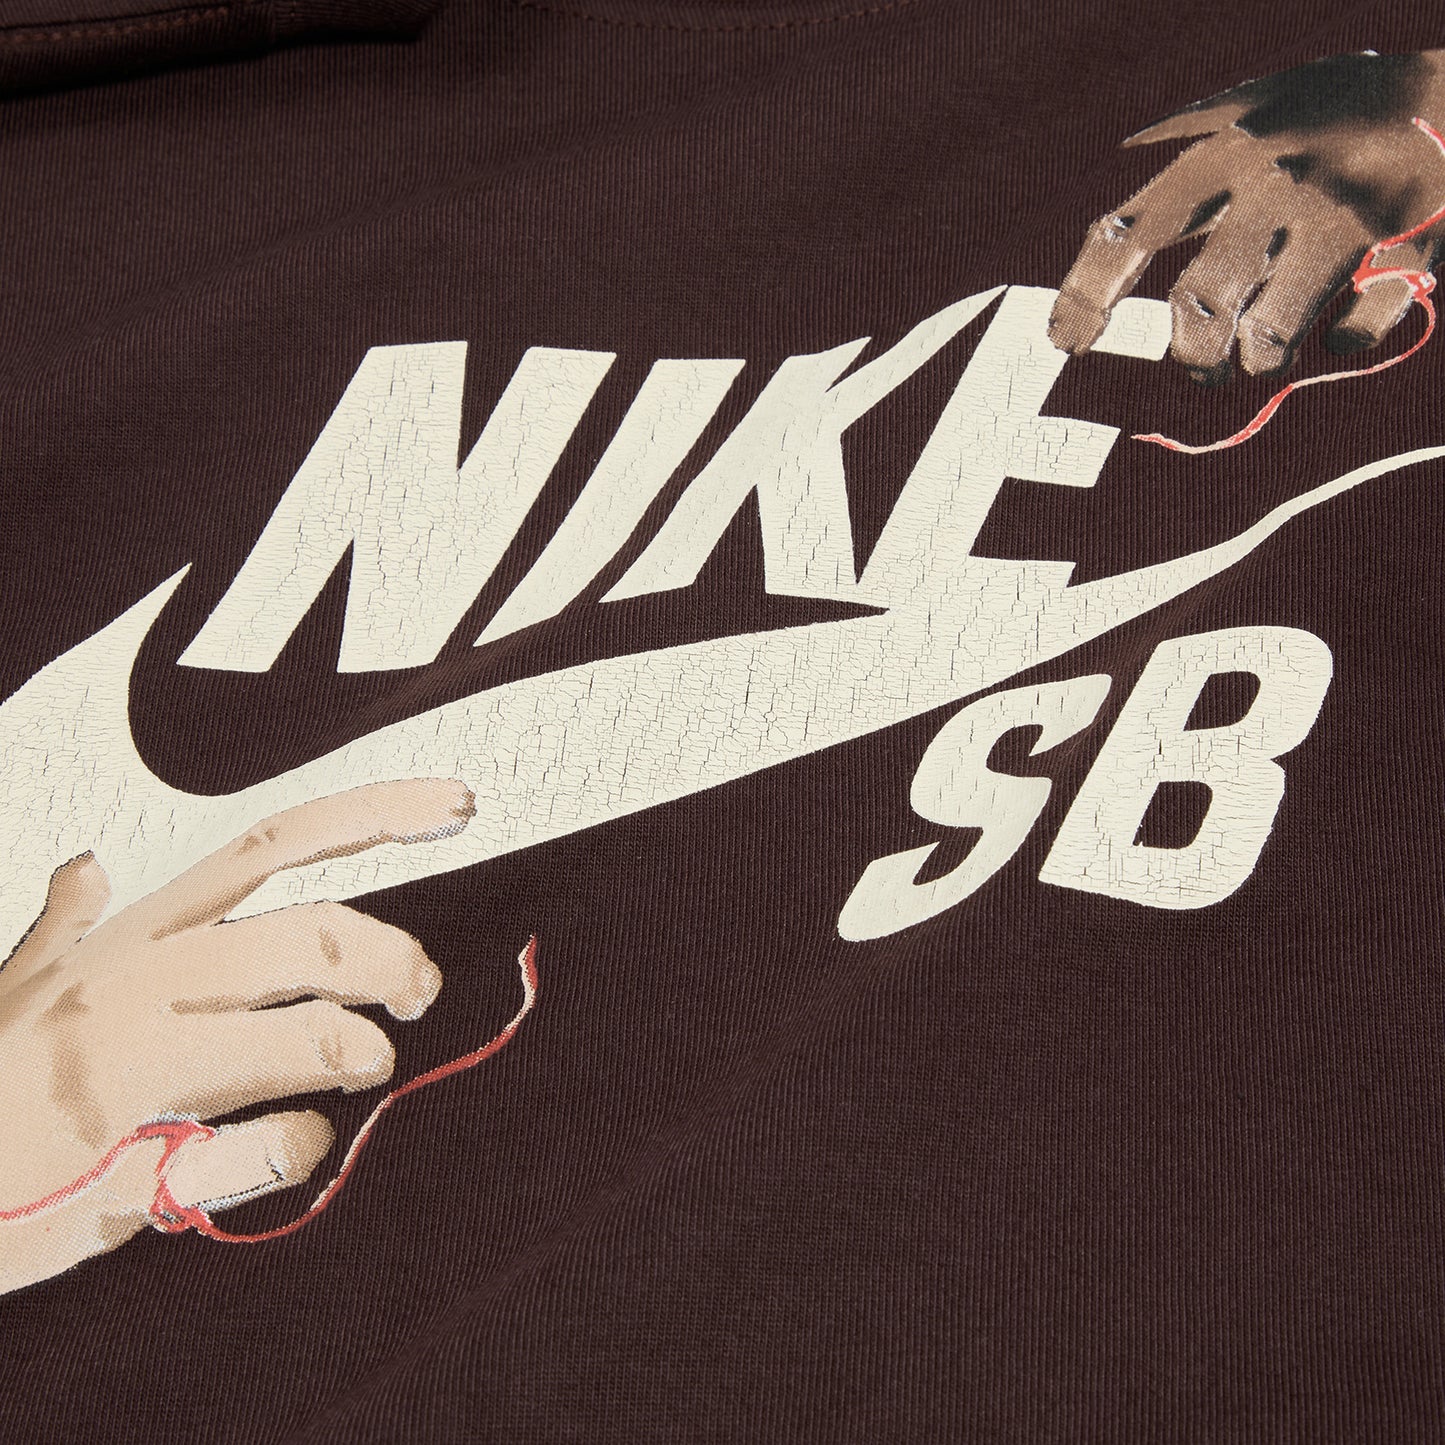 Nike SB Skate T-Shirt (Earth)